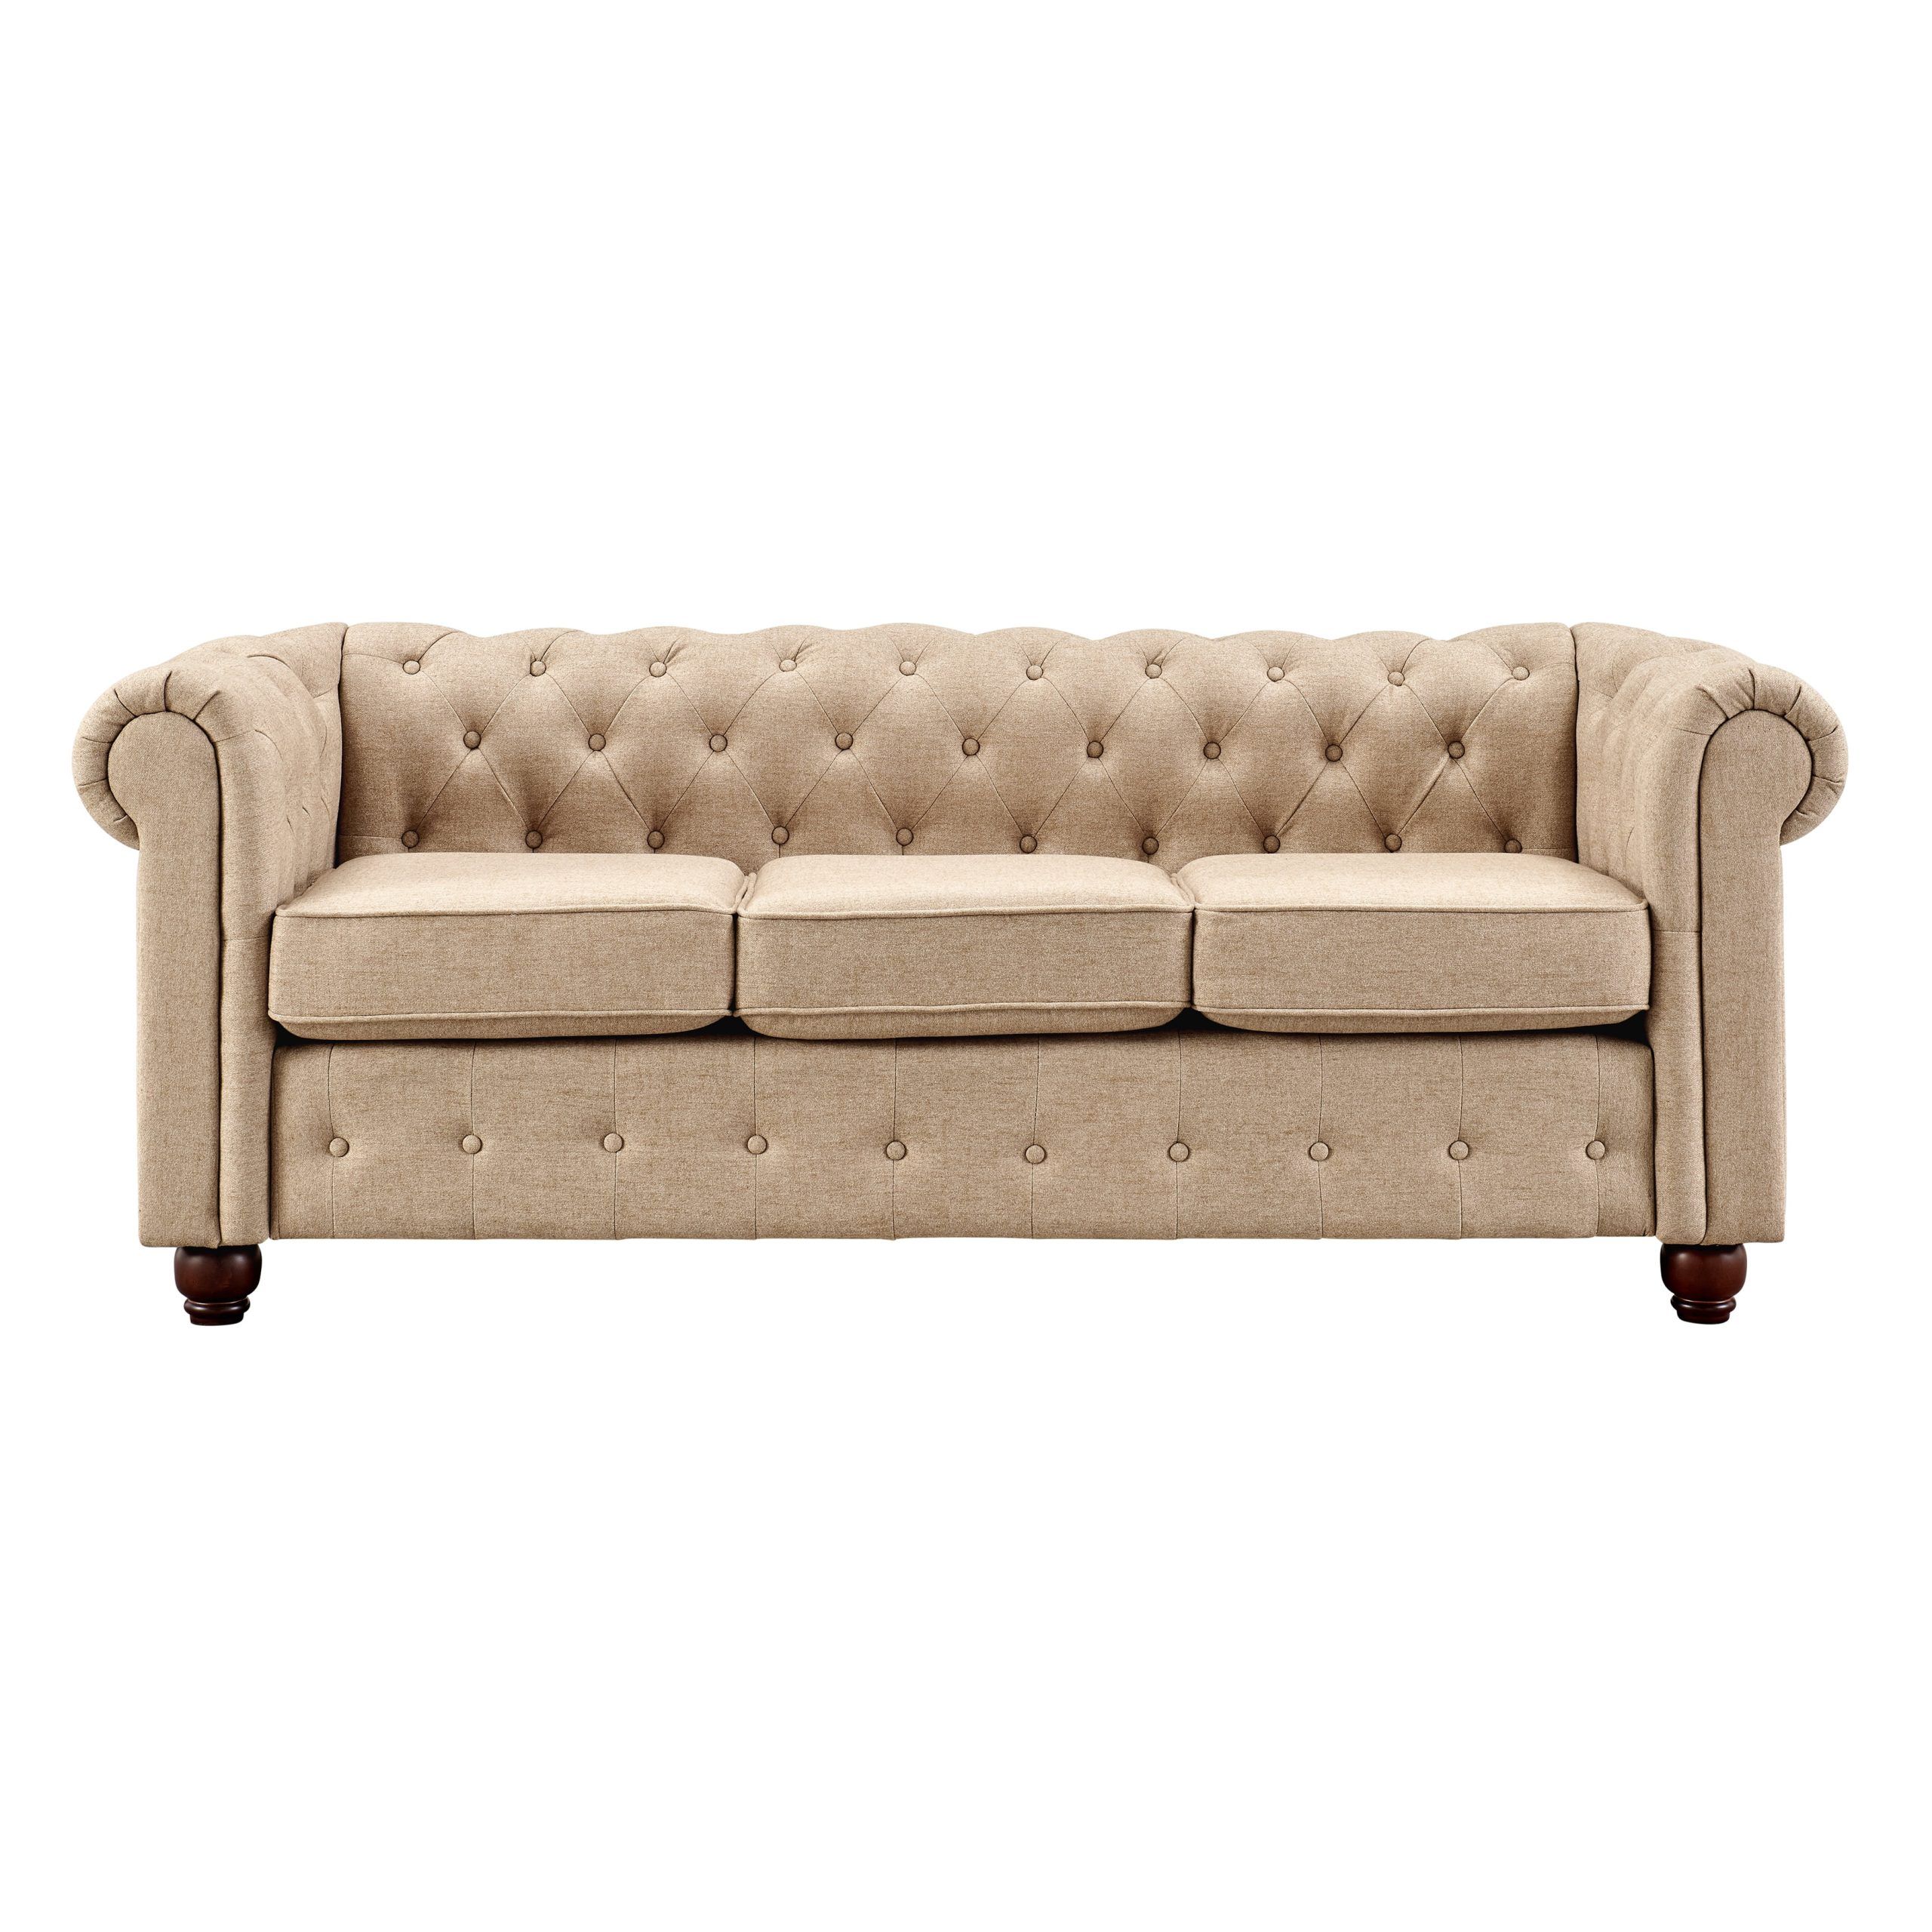 Homefare Cream Living Room Sofa – Walmart Within Sofas In Cream (View 10 of 20)